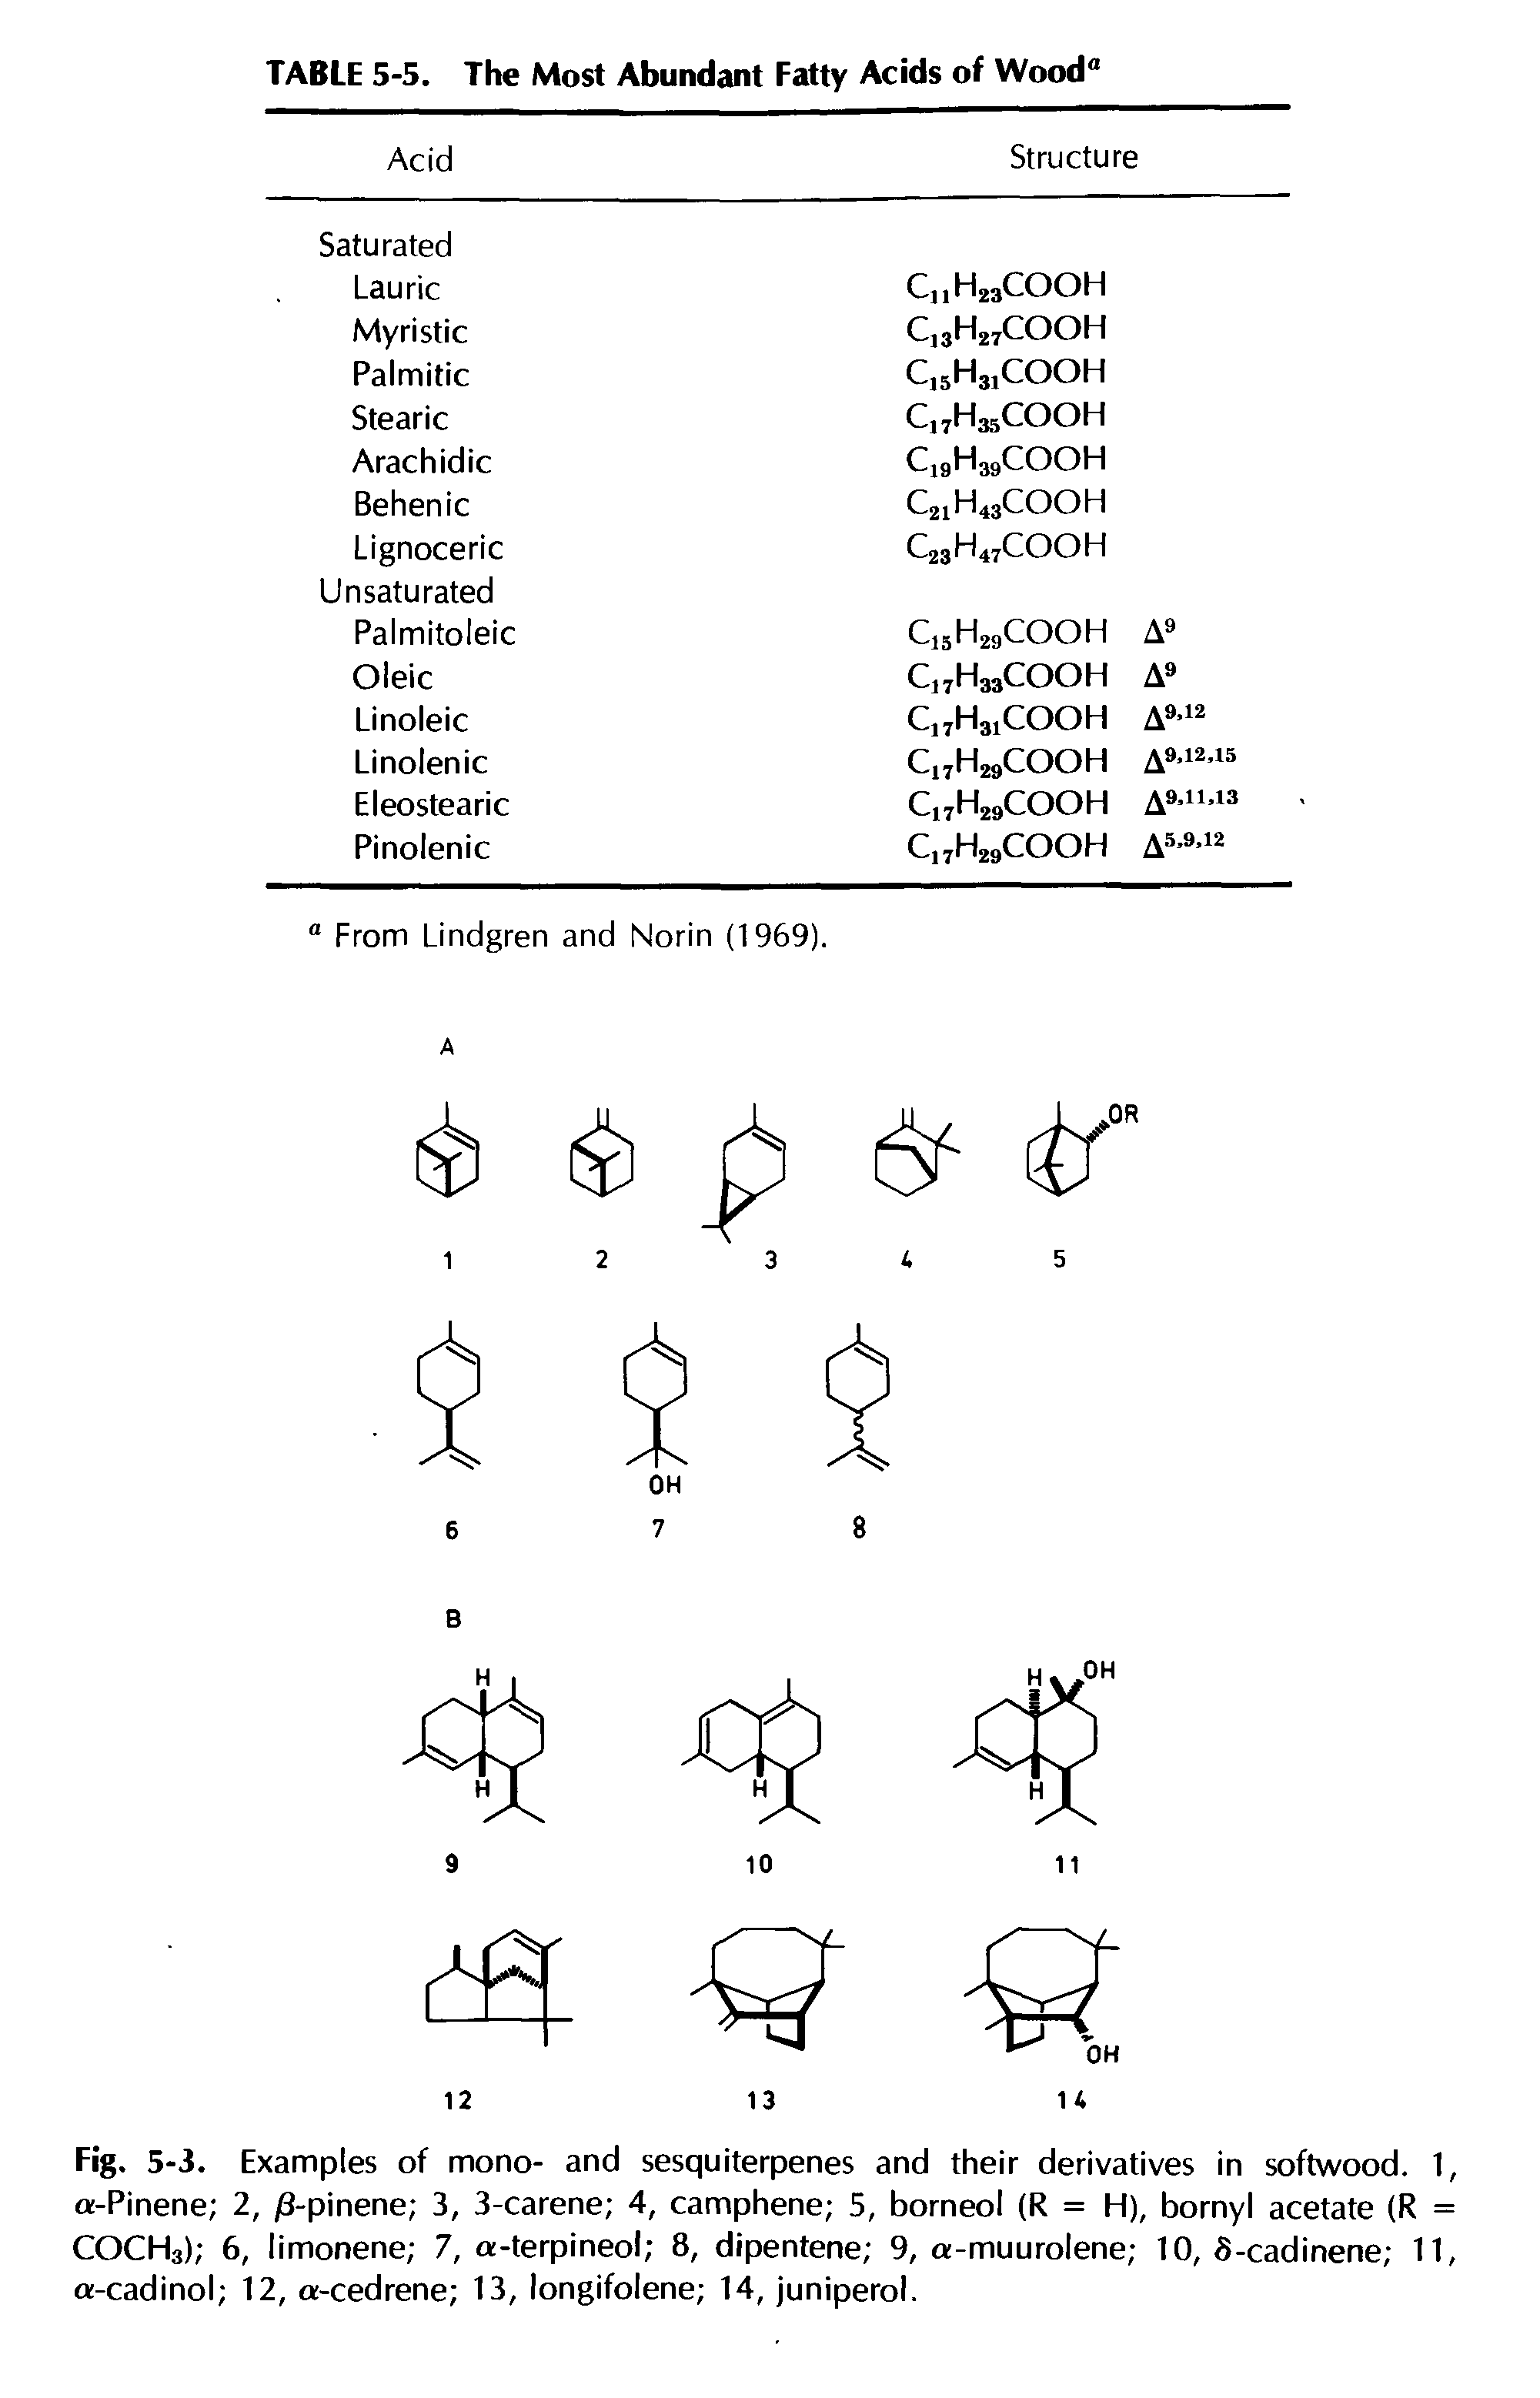 Fig. 5-3. Examples of mono- and sesquiterpenes and their derivatives in softwood. 1, a-Pinene 2, /3-pinene 3, 3-carene 4, camphene 5, borneol (R = H), bornyl acetate (R = COCH3) 6, limonene 7, a-terpineol 8, dipentene 9, a-muurolene 10, 8-cadinene 11, a-cadinol 12, a-cedrene 13, longifolene 14, juniperol.